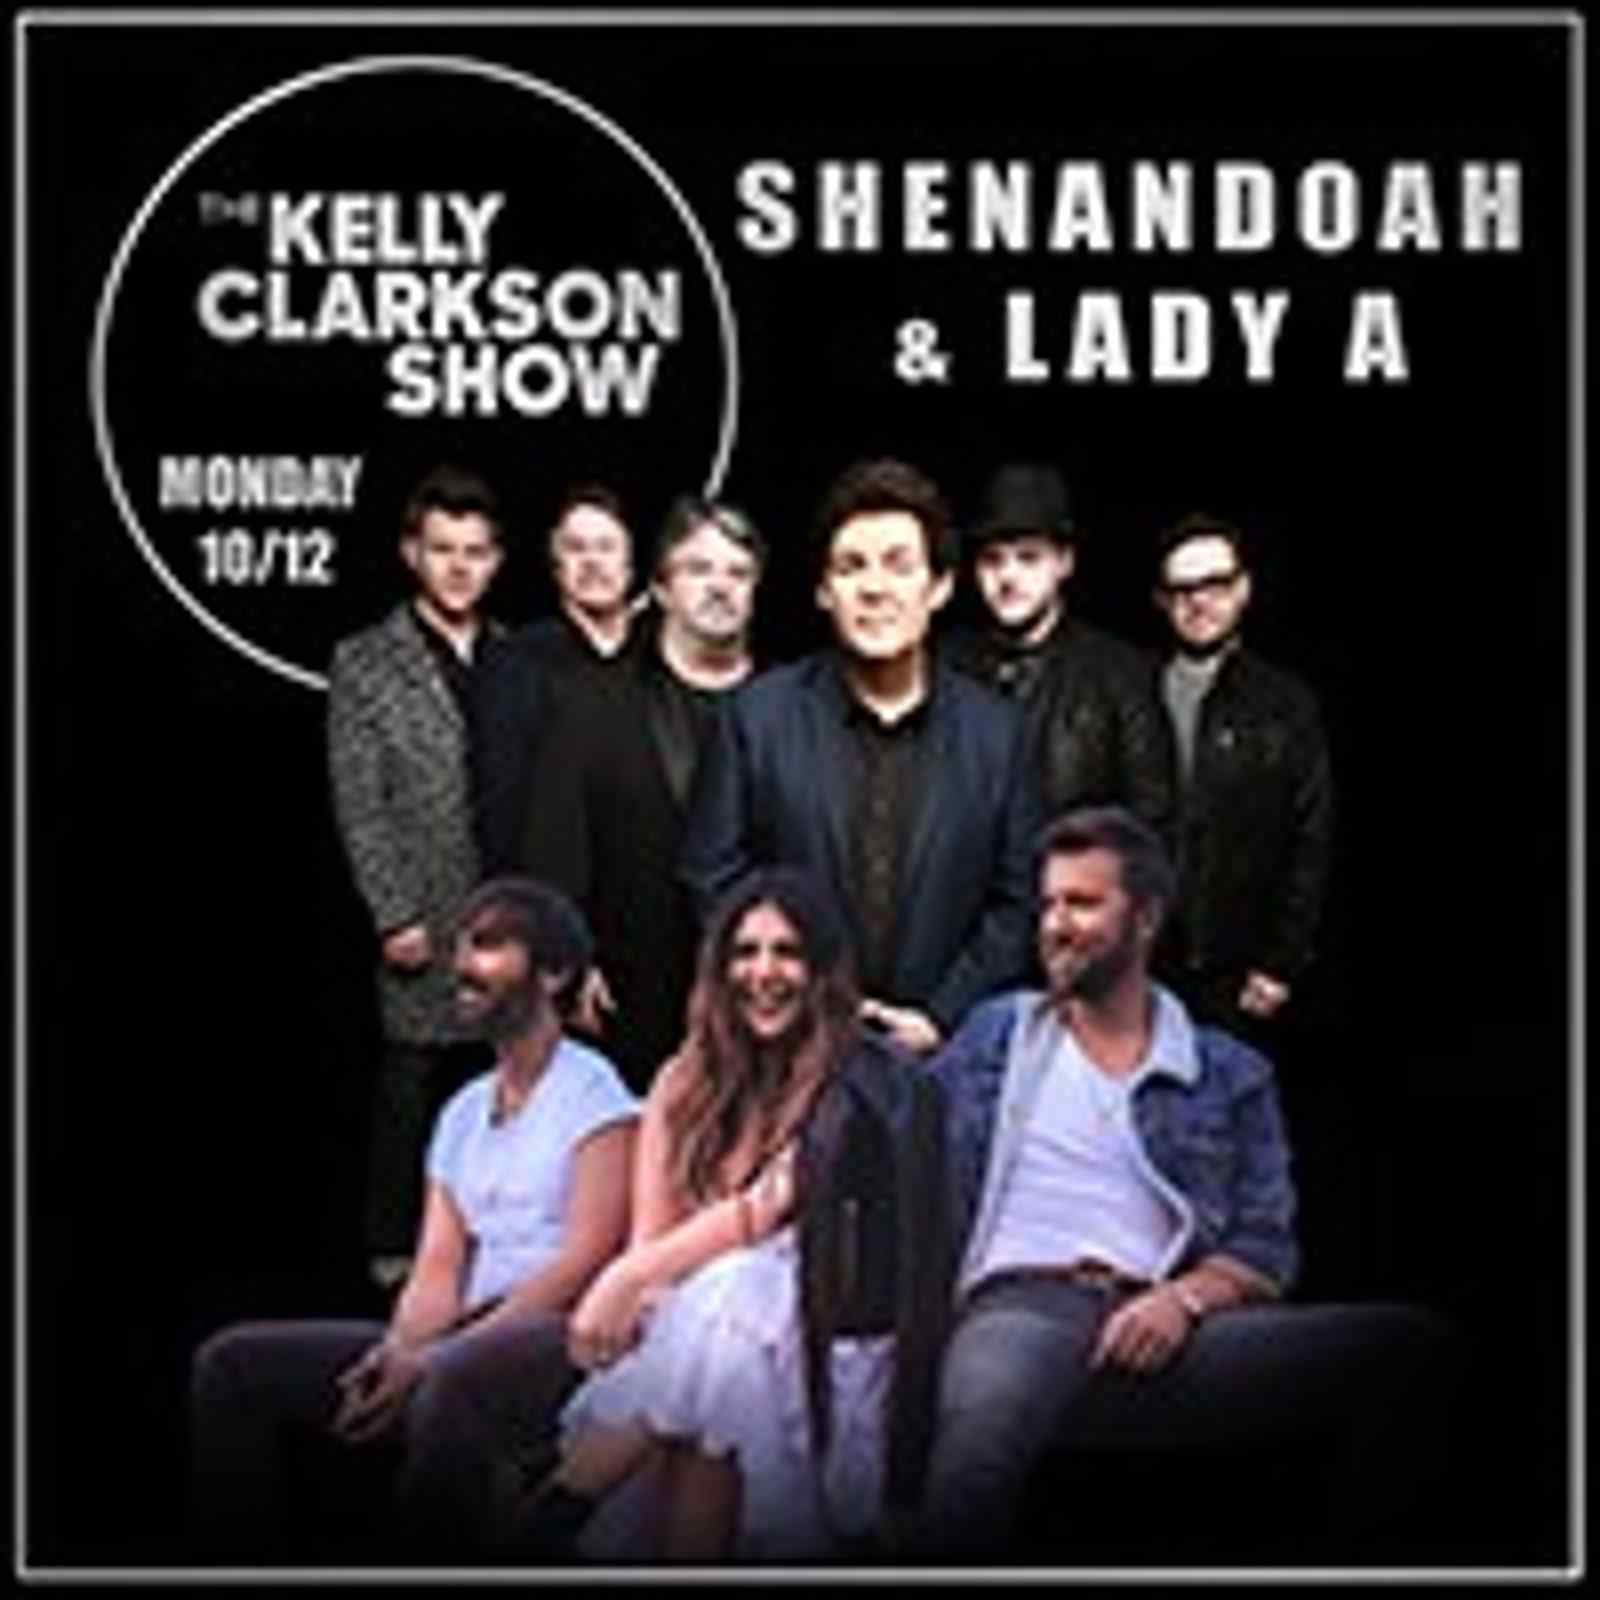 The Kelly Clarkson Show: Shenandoah & Lady A